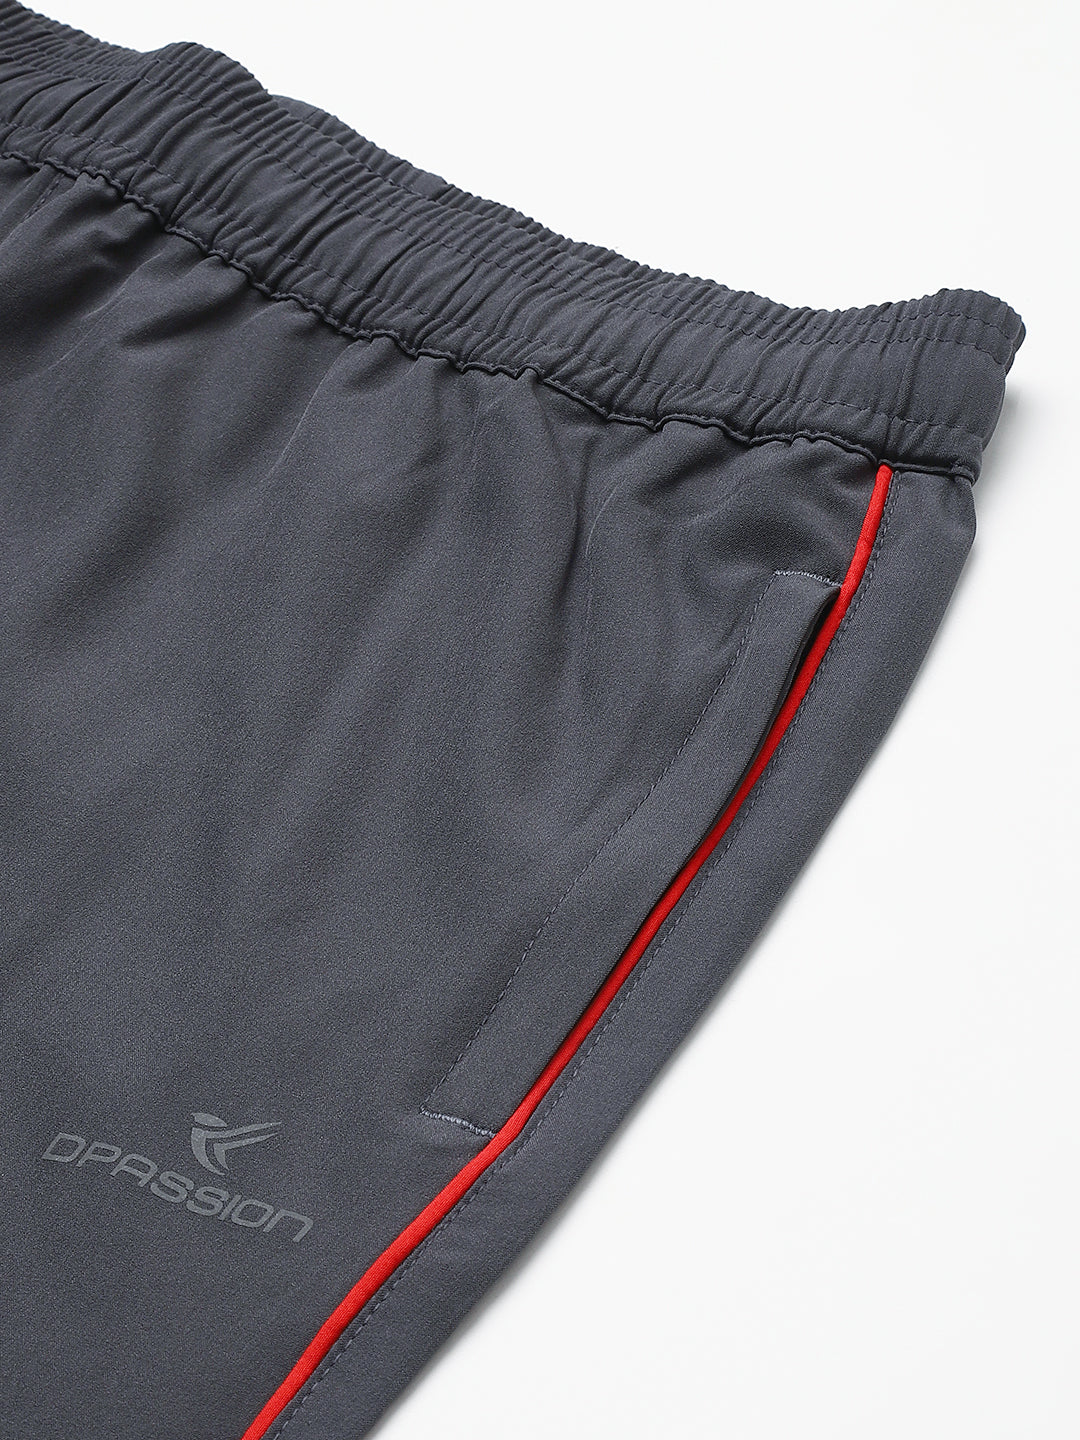 PERFORMAX Colourblock Straight Track Pants With Slip Pockets|BDF Shopping